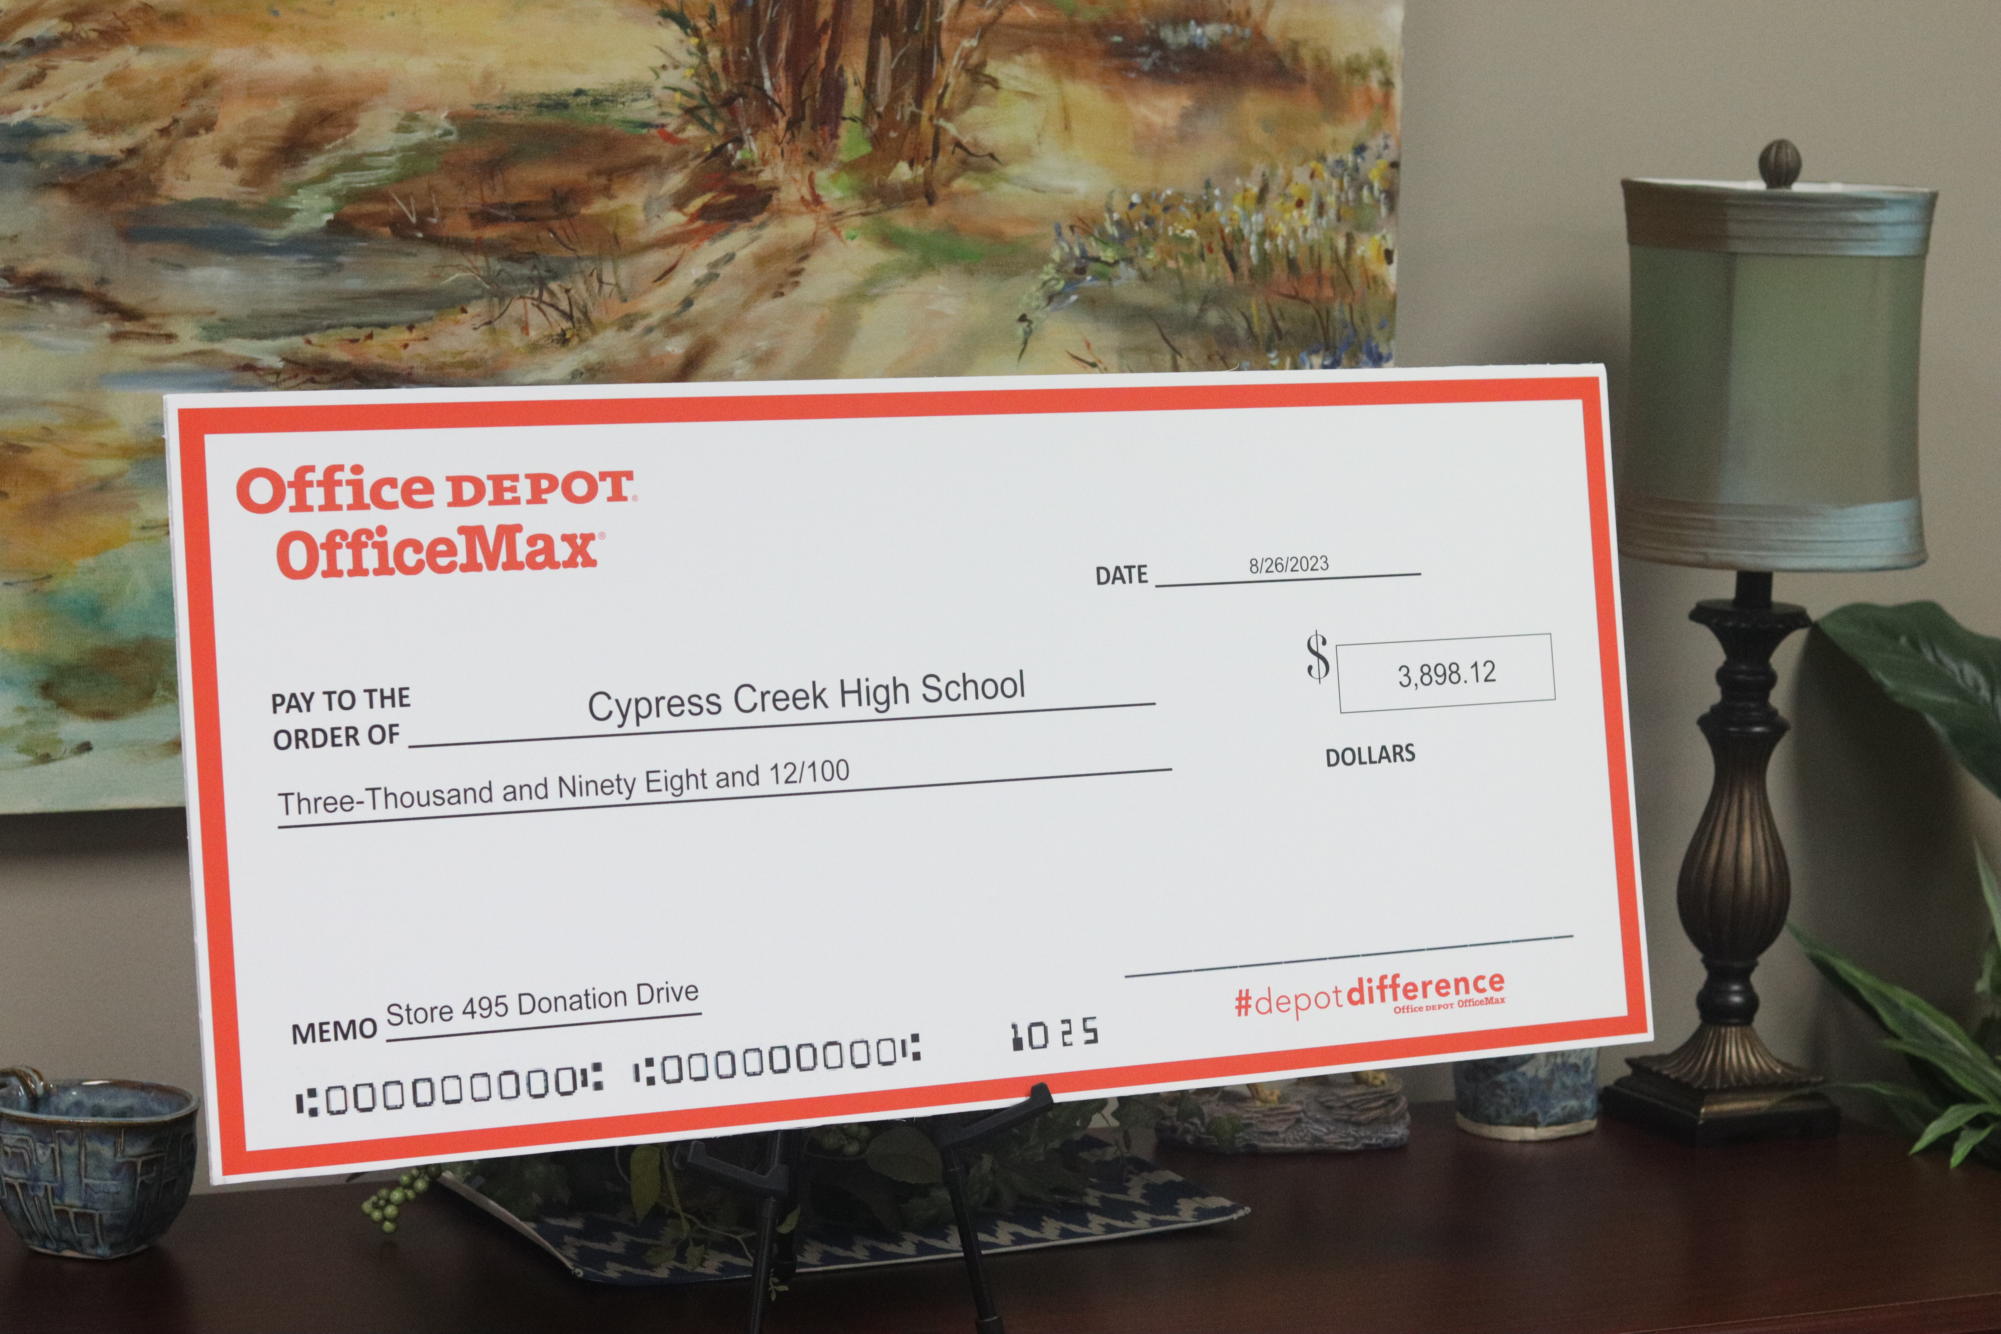 Office Depot has donated $3,898.12 to Cypress Creek High School through the Adopt-a-School partnership. Photo by Sebastian Mar.